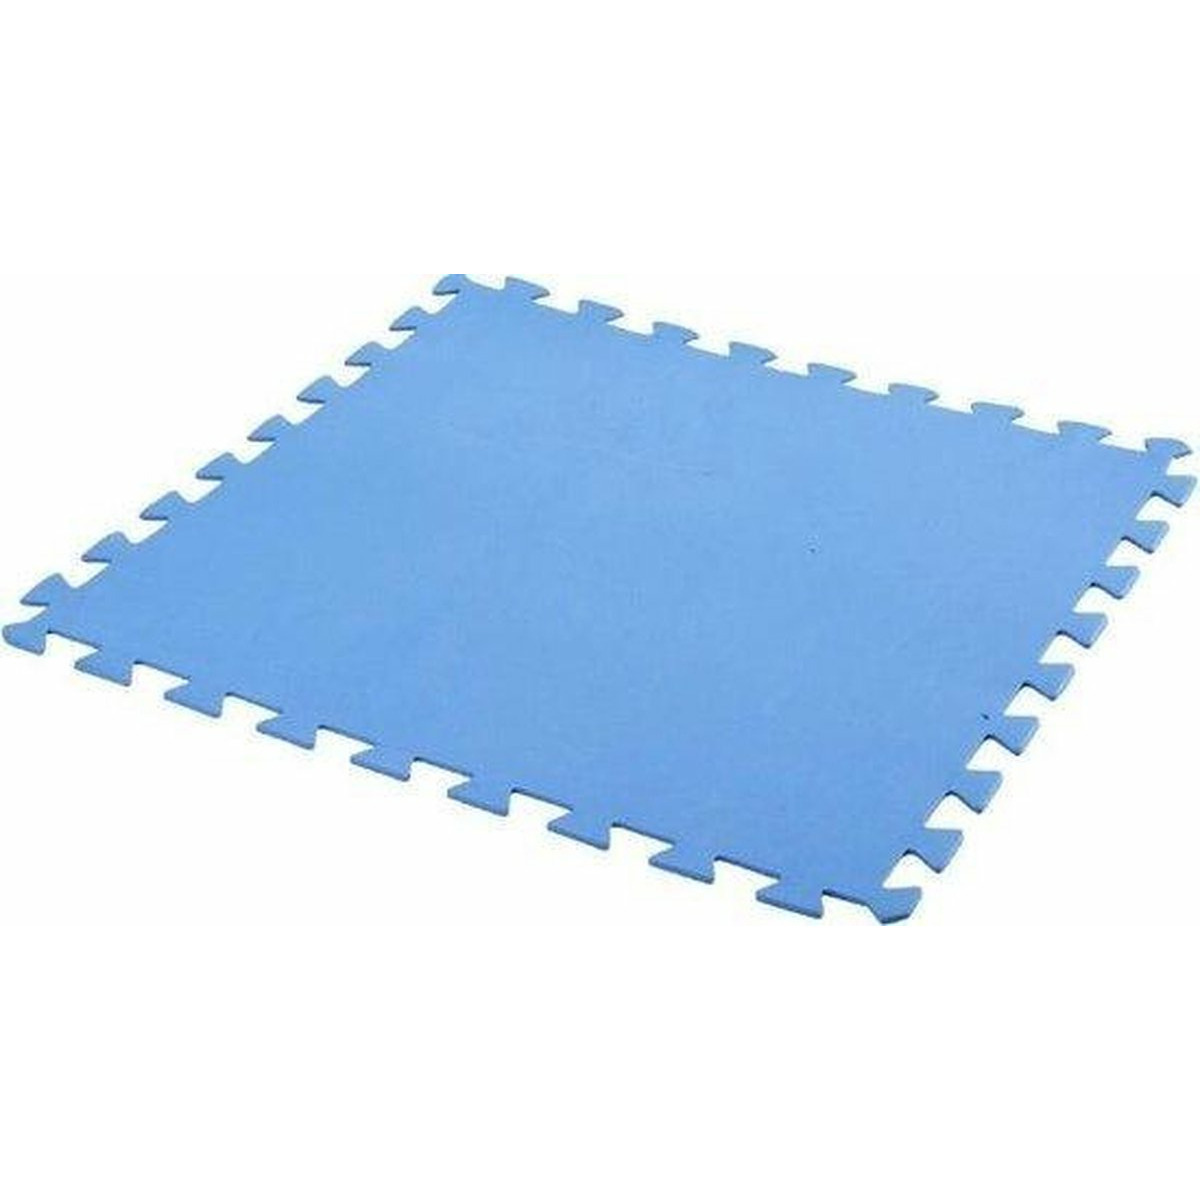 9x stuks Foam puzzelmat zwembadtegels/fitnesstegels blauw 50 x 50 cm -